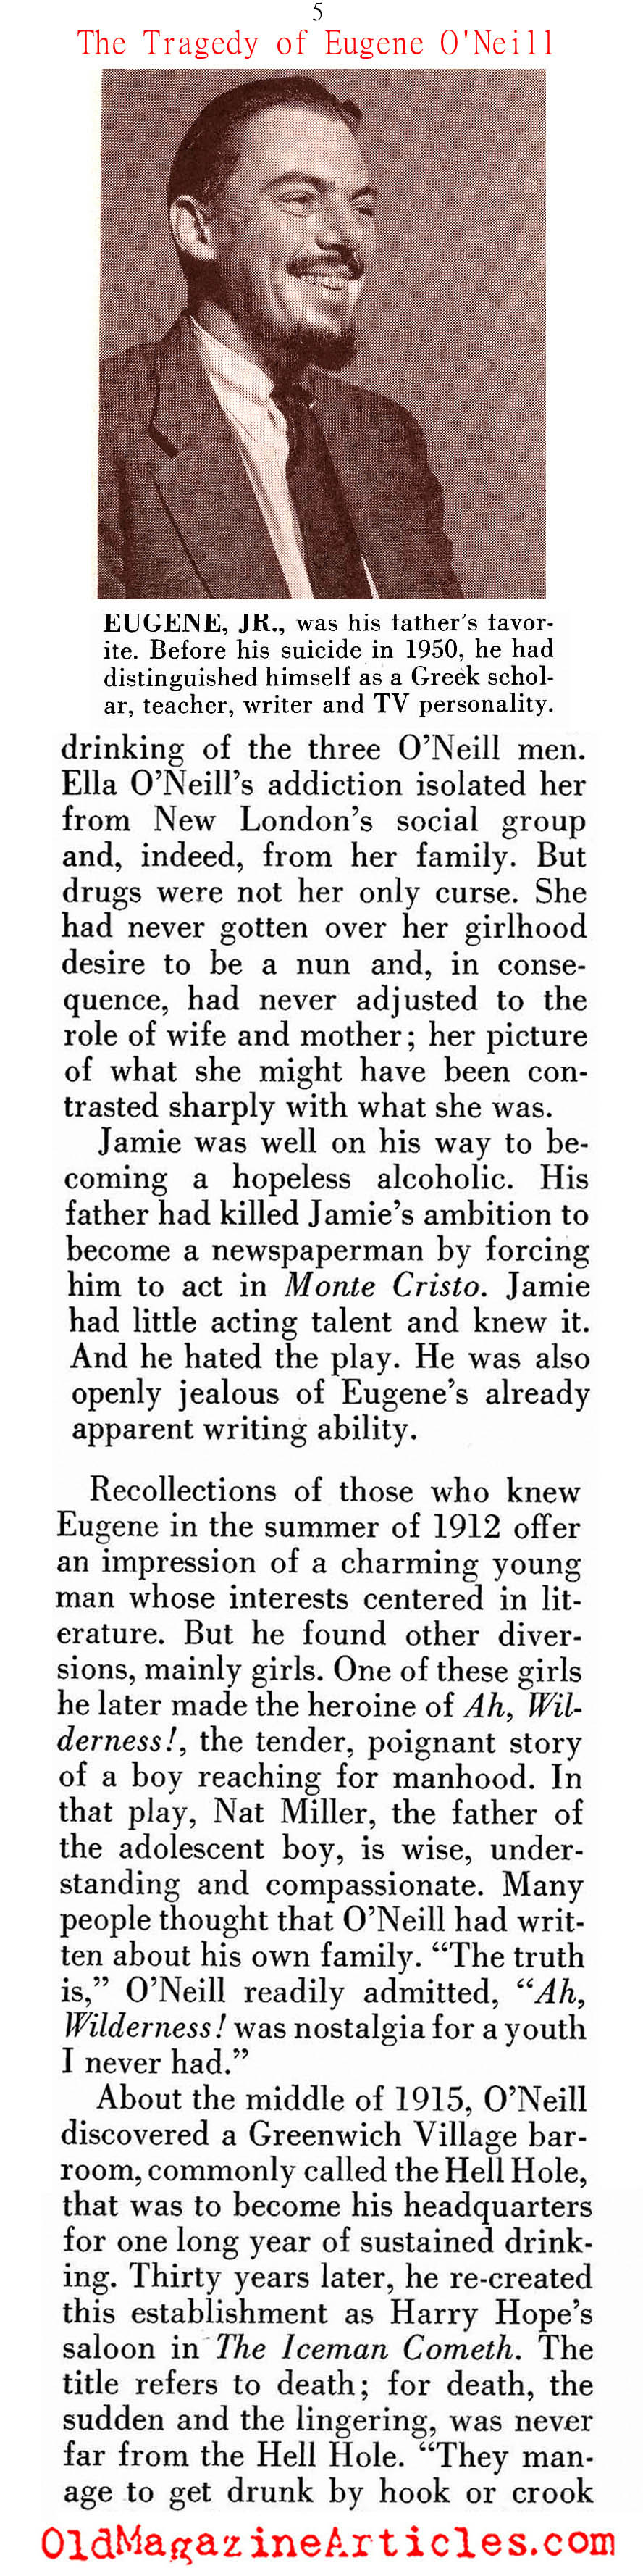 The Tragedy of Eugene O'Neill (Look Magazine, 1959)